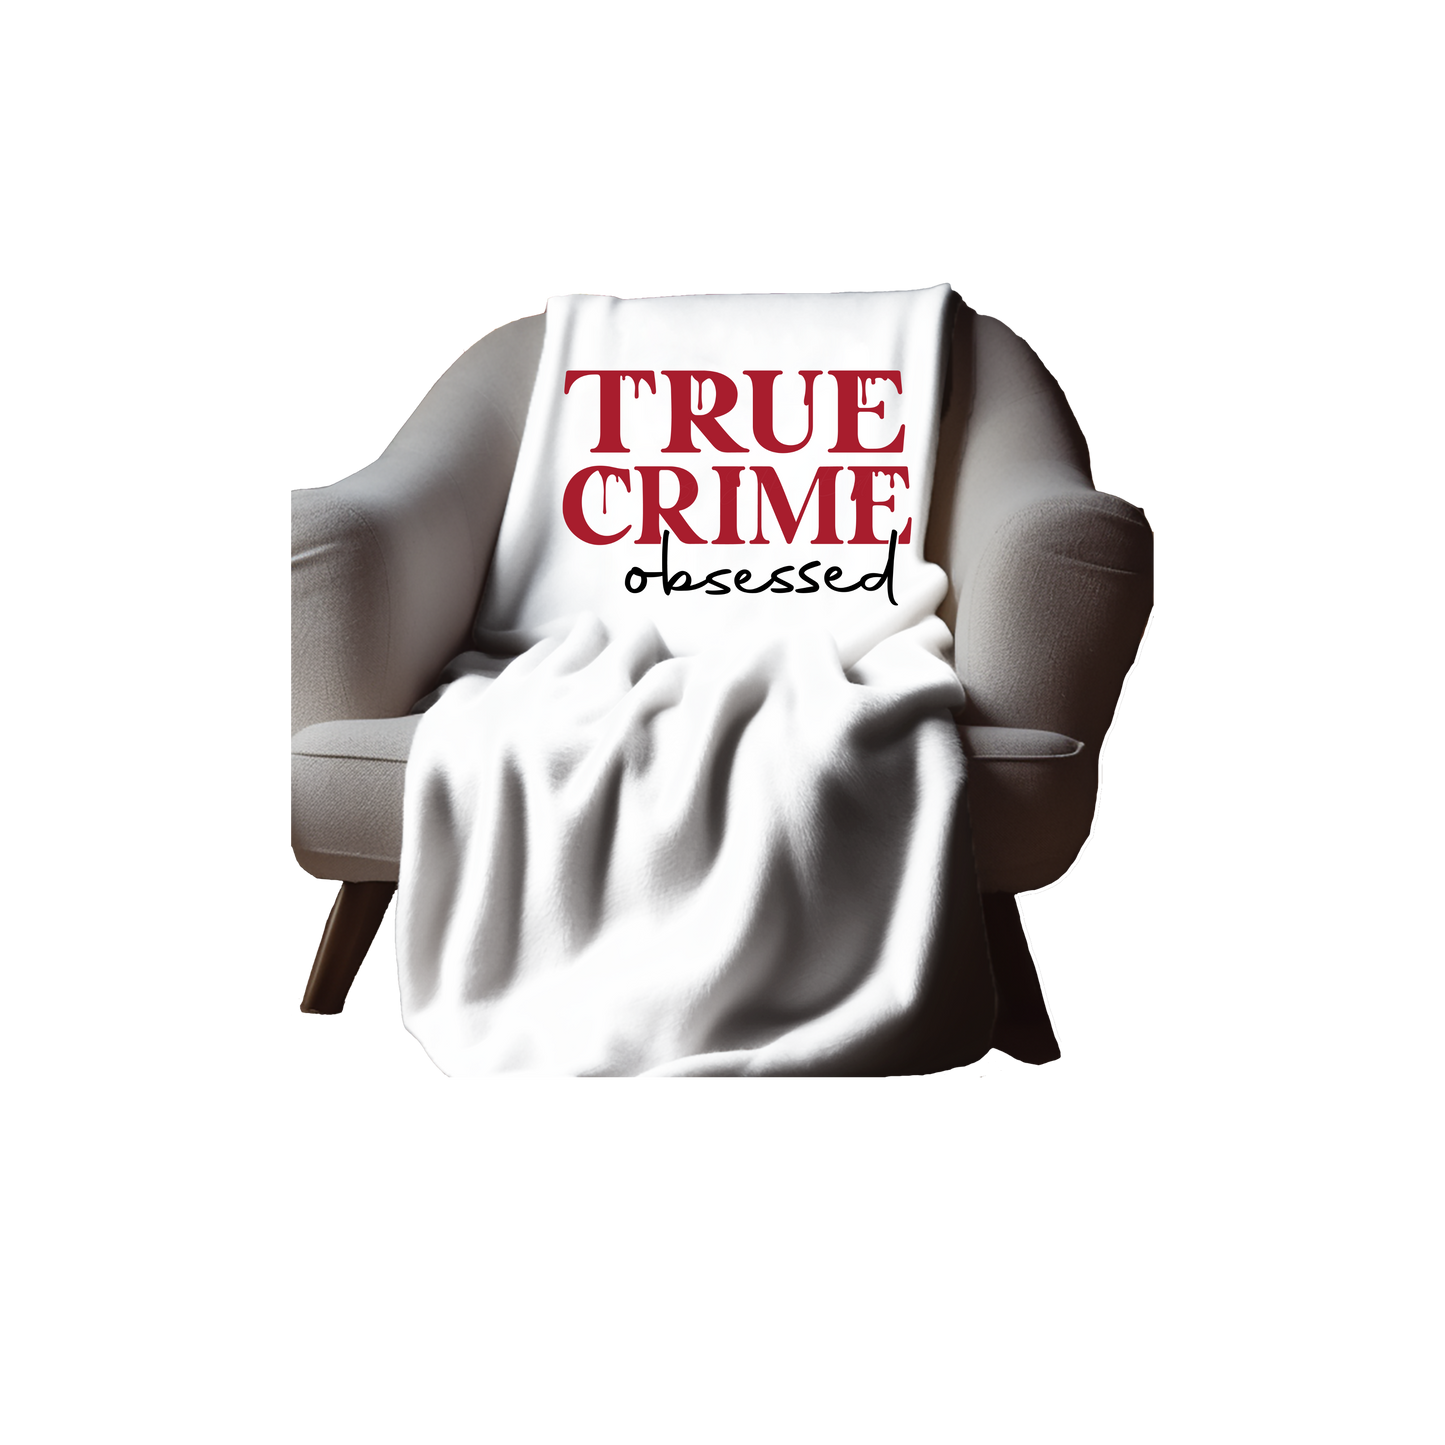 True Crime Obsessed